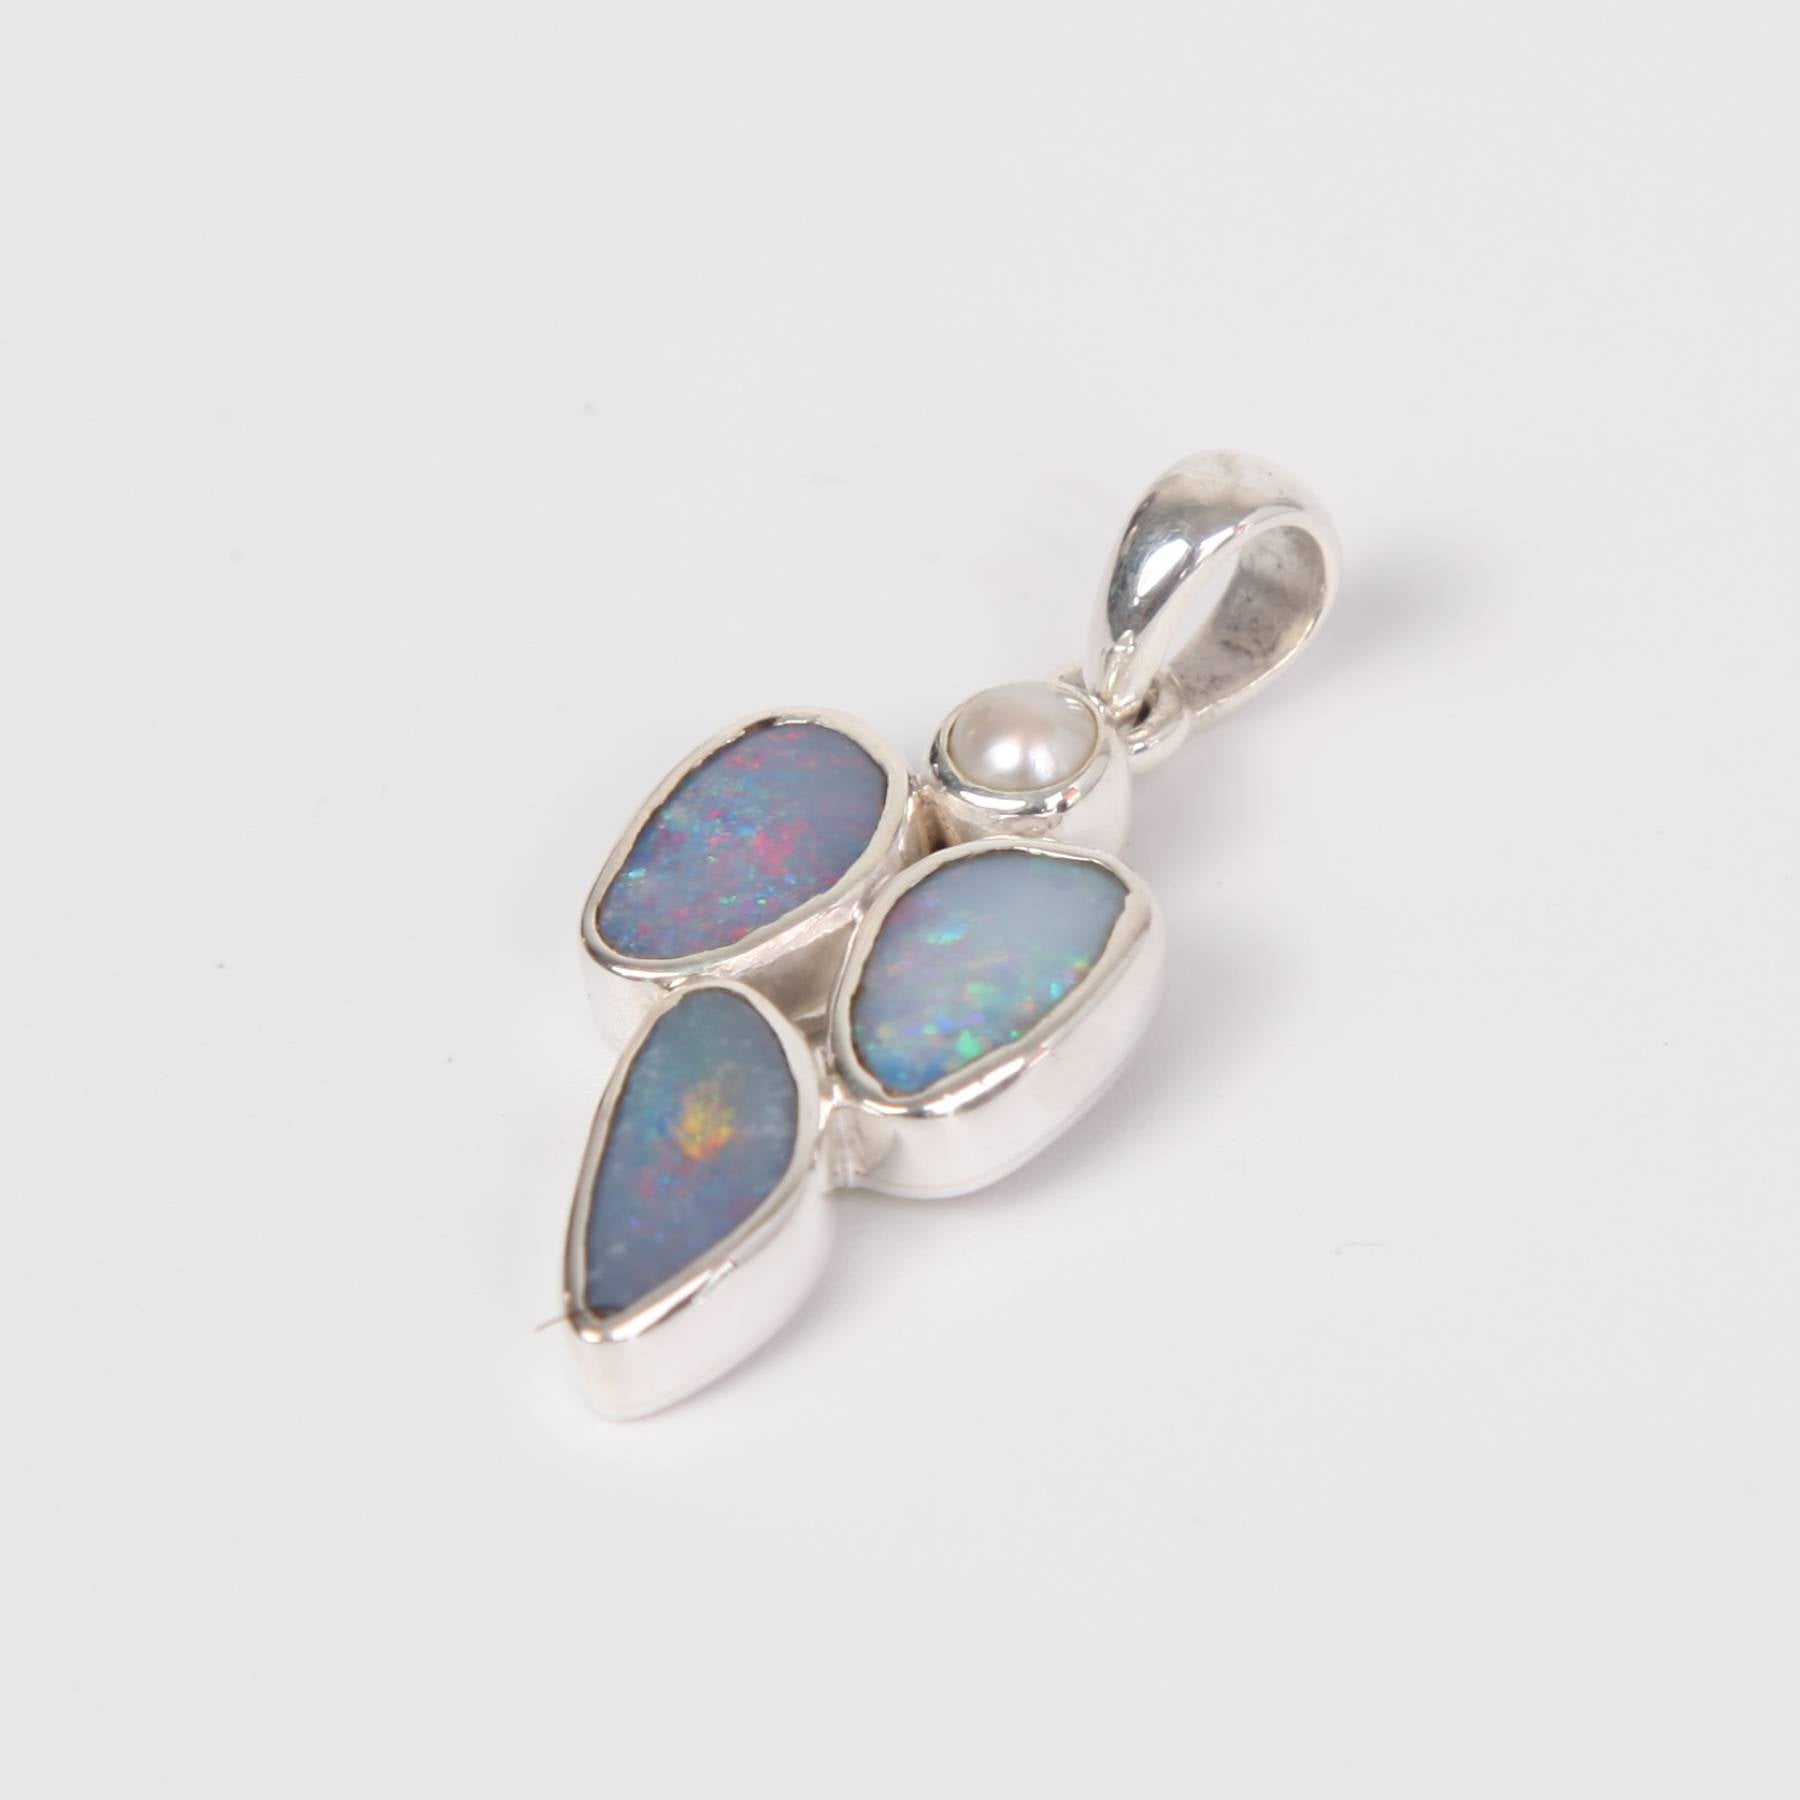 Australian Opal Sterling Silver Pendant with Fresh Water Pearl